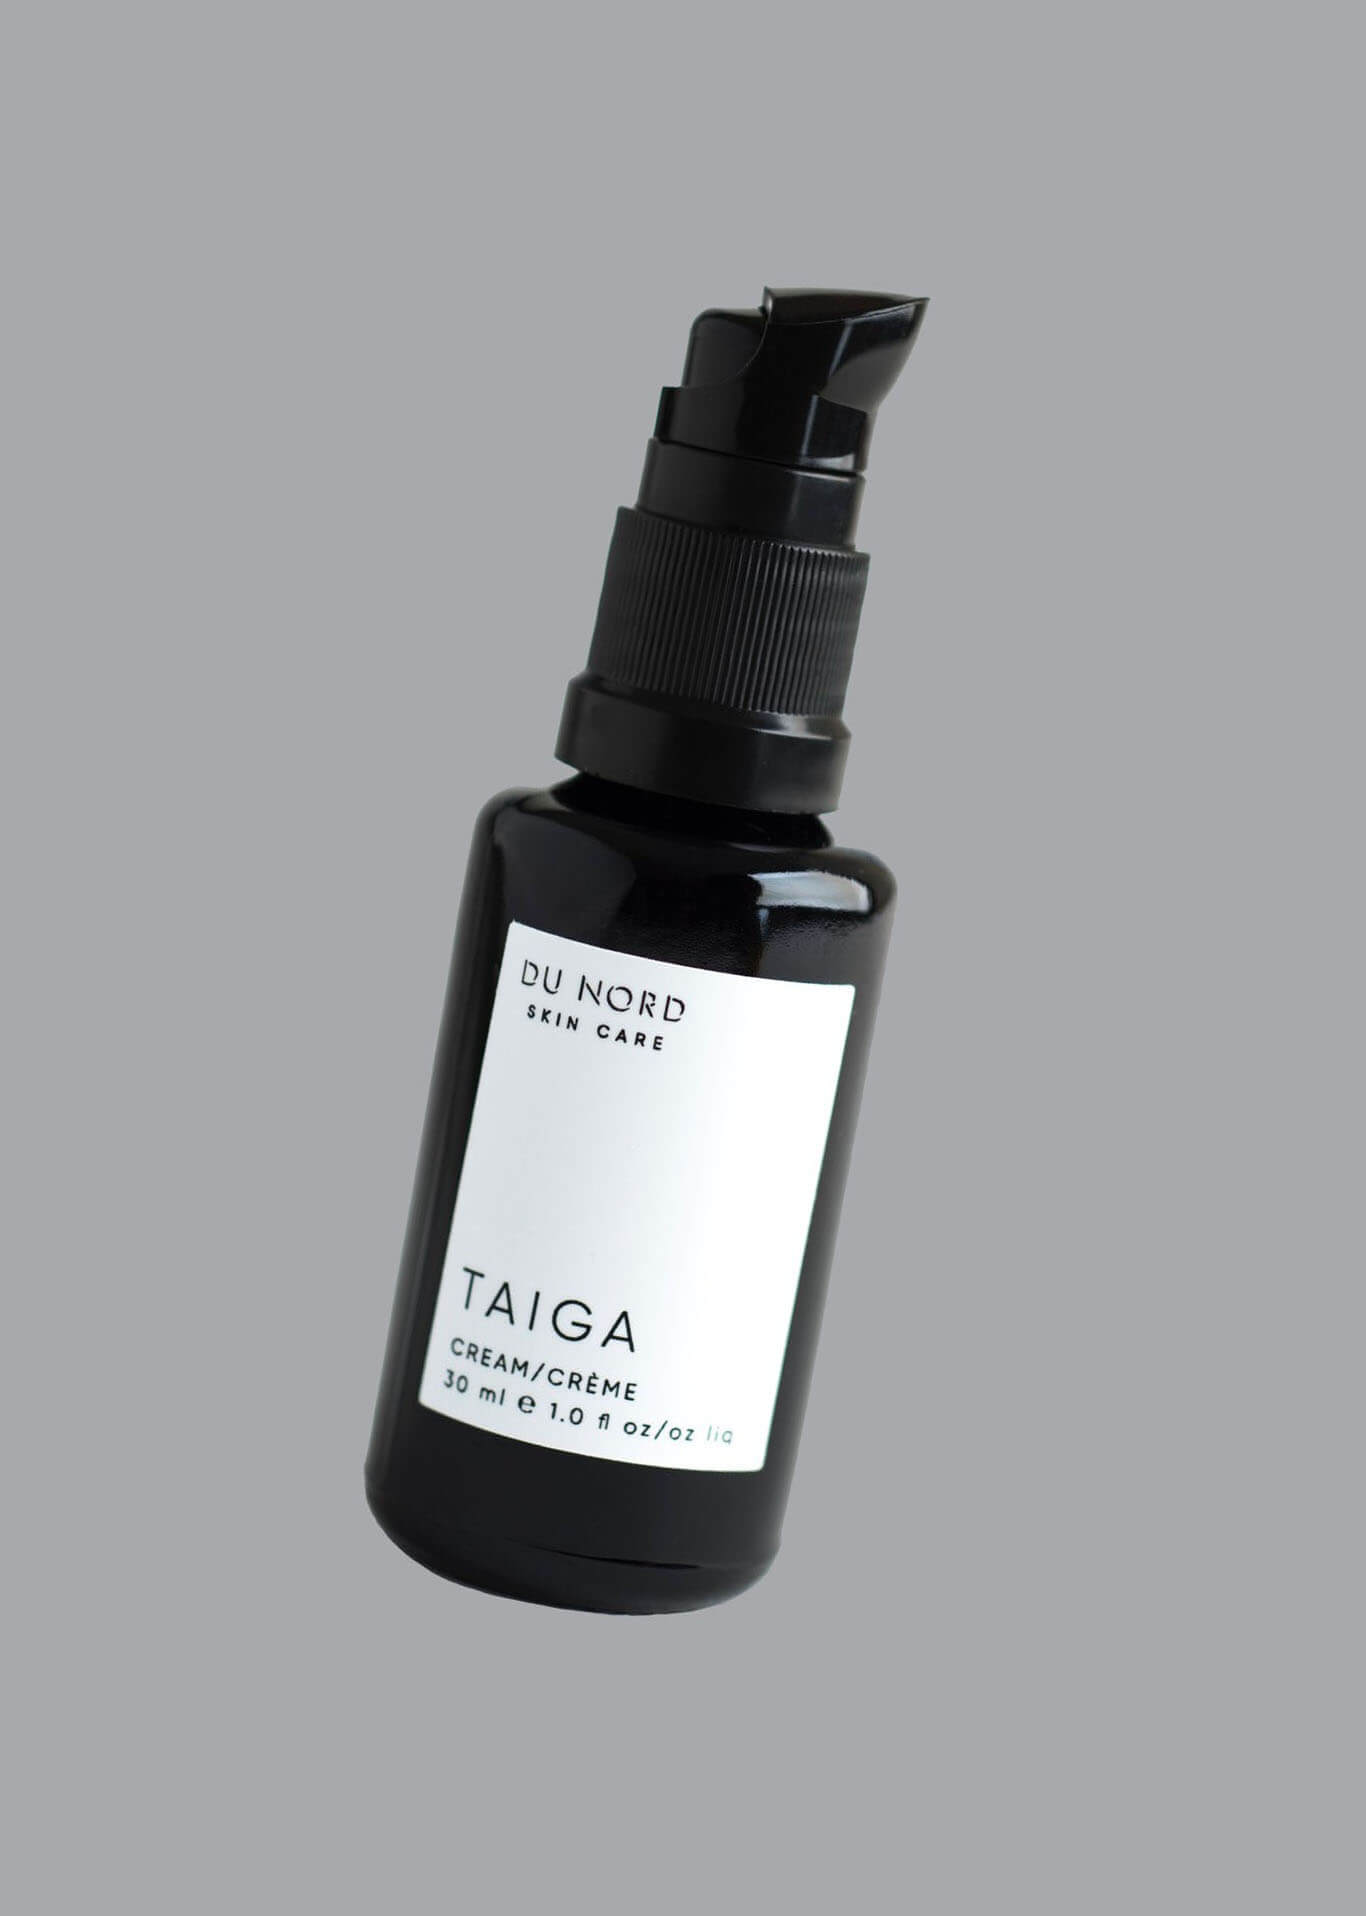 Oat Cosmetics product photo of DU-NORD Taiga Cream.